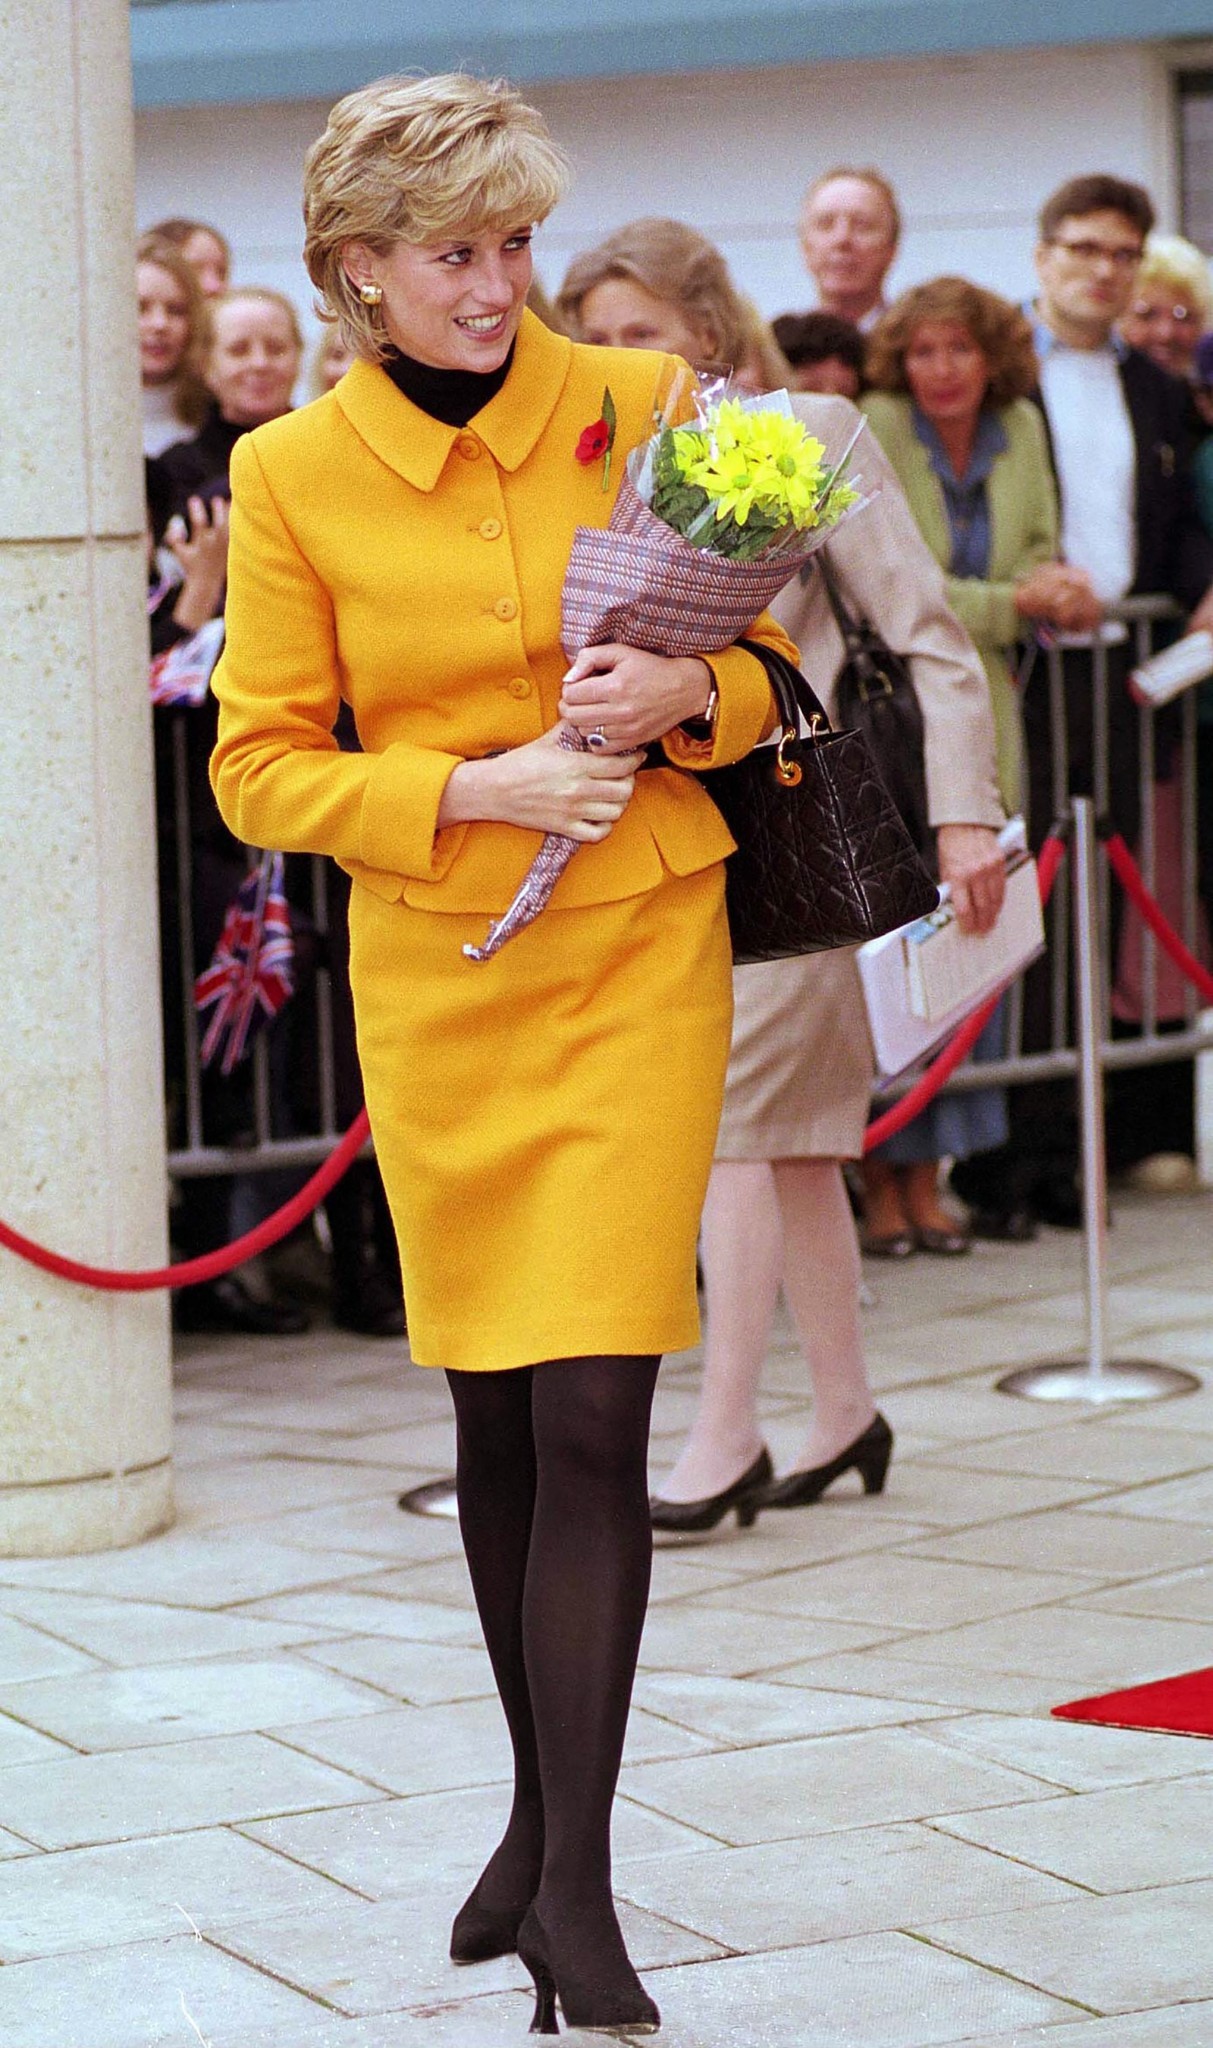 Princess Diana's favourite Dior bag gets a dazzling artistic update